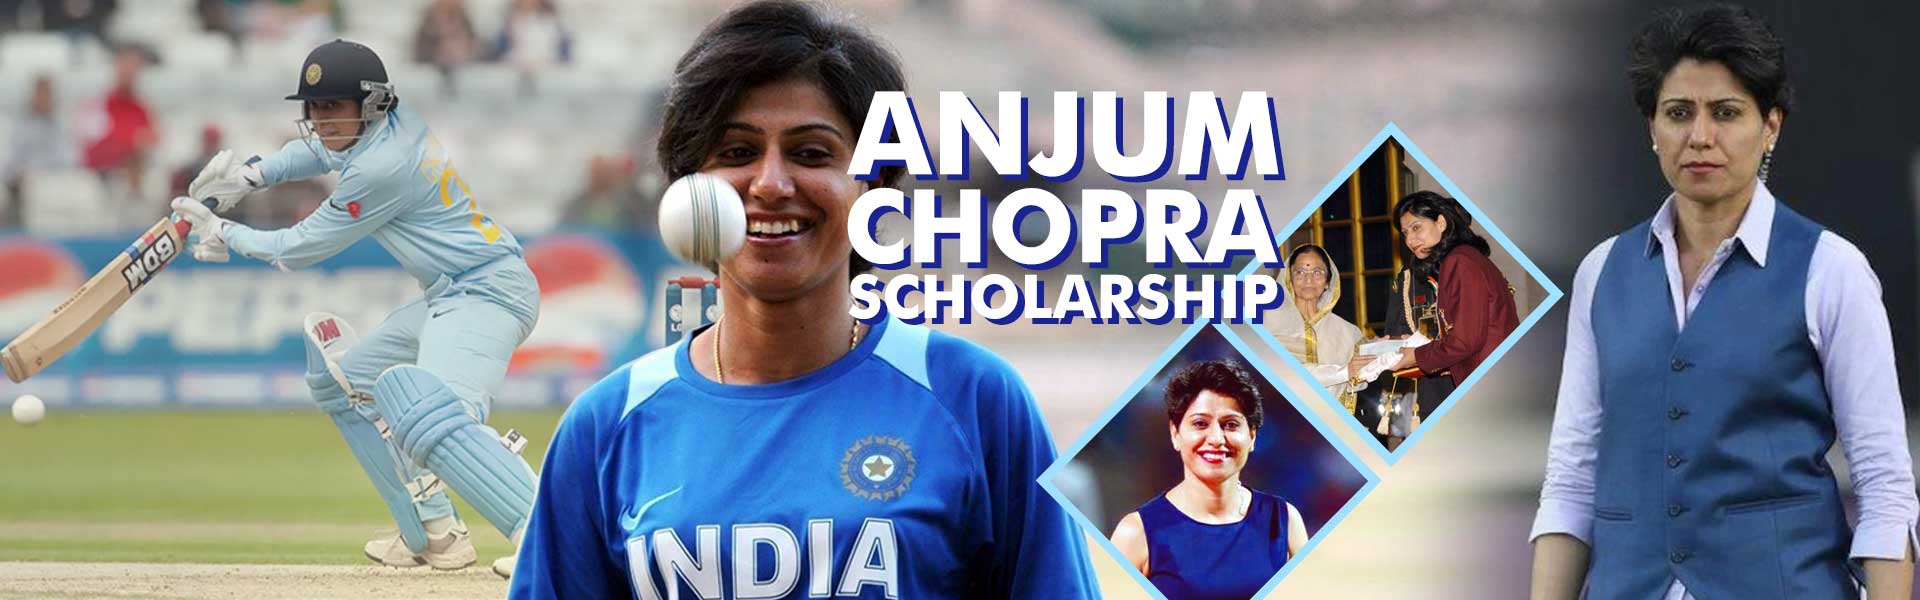 anjum chopra cricket scholarship